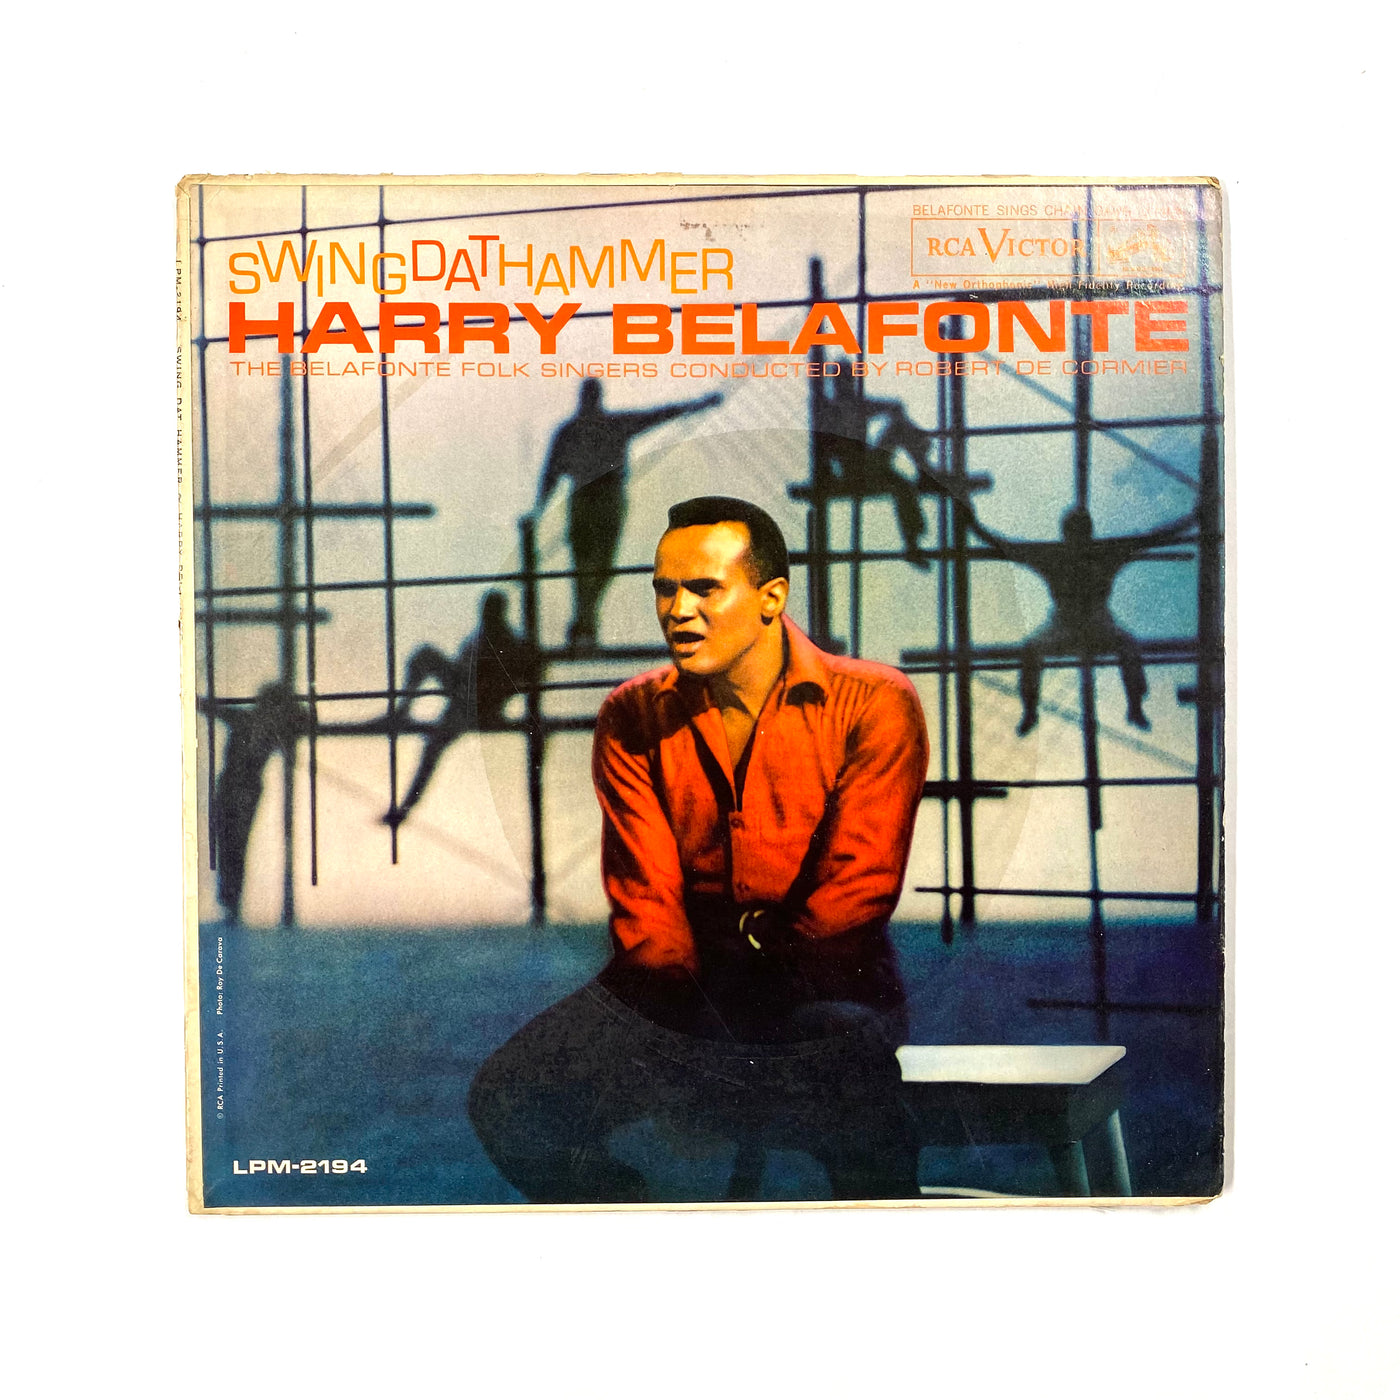 Harry Belafonte And The Belafonte Folk Singers Conducted By Robert DeCormier - Swing Dat Hammer